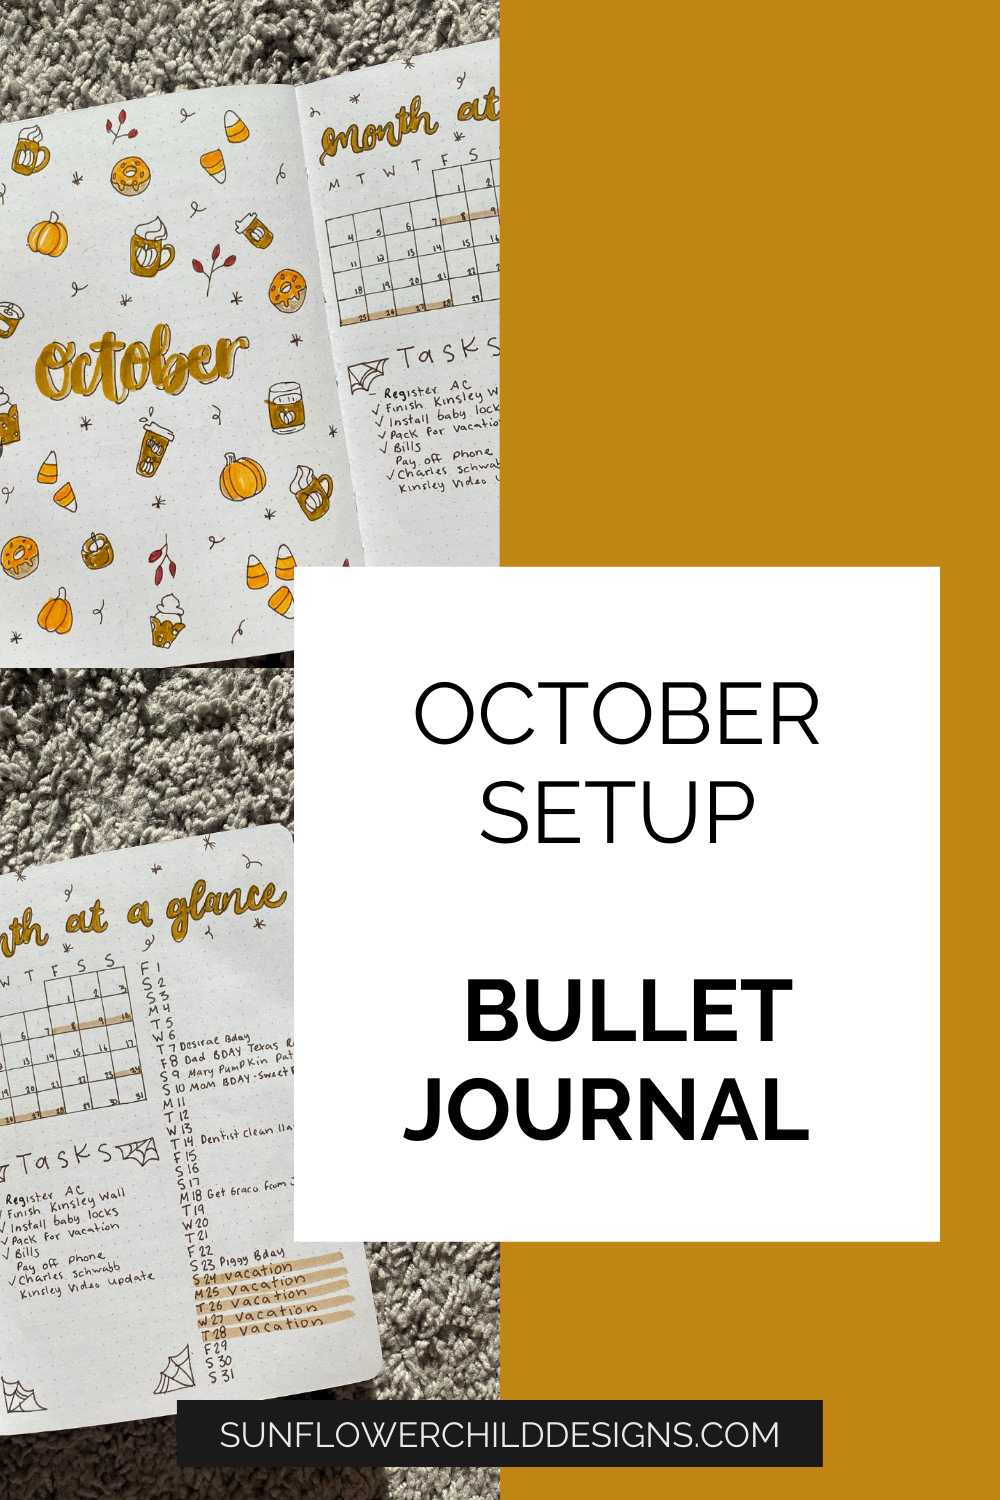 October-bullet-journal-ideas-11.png